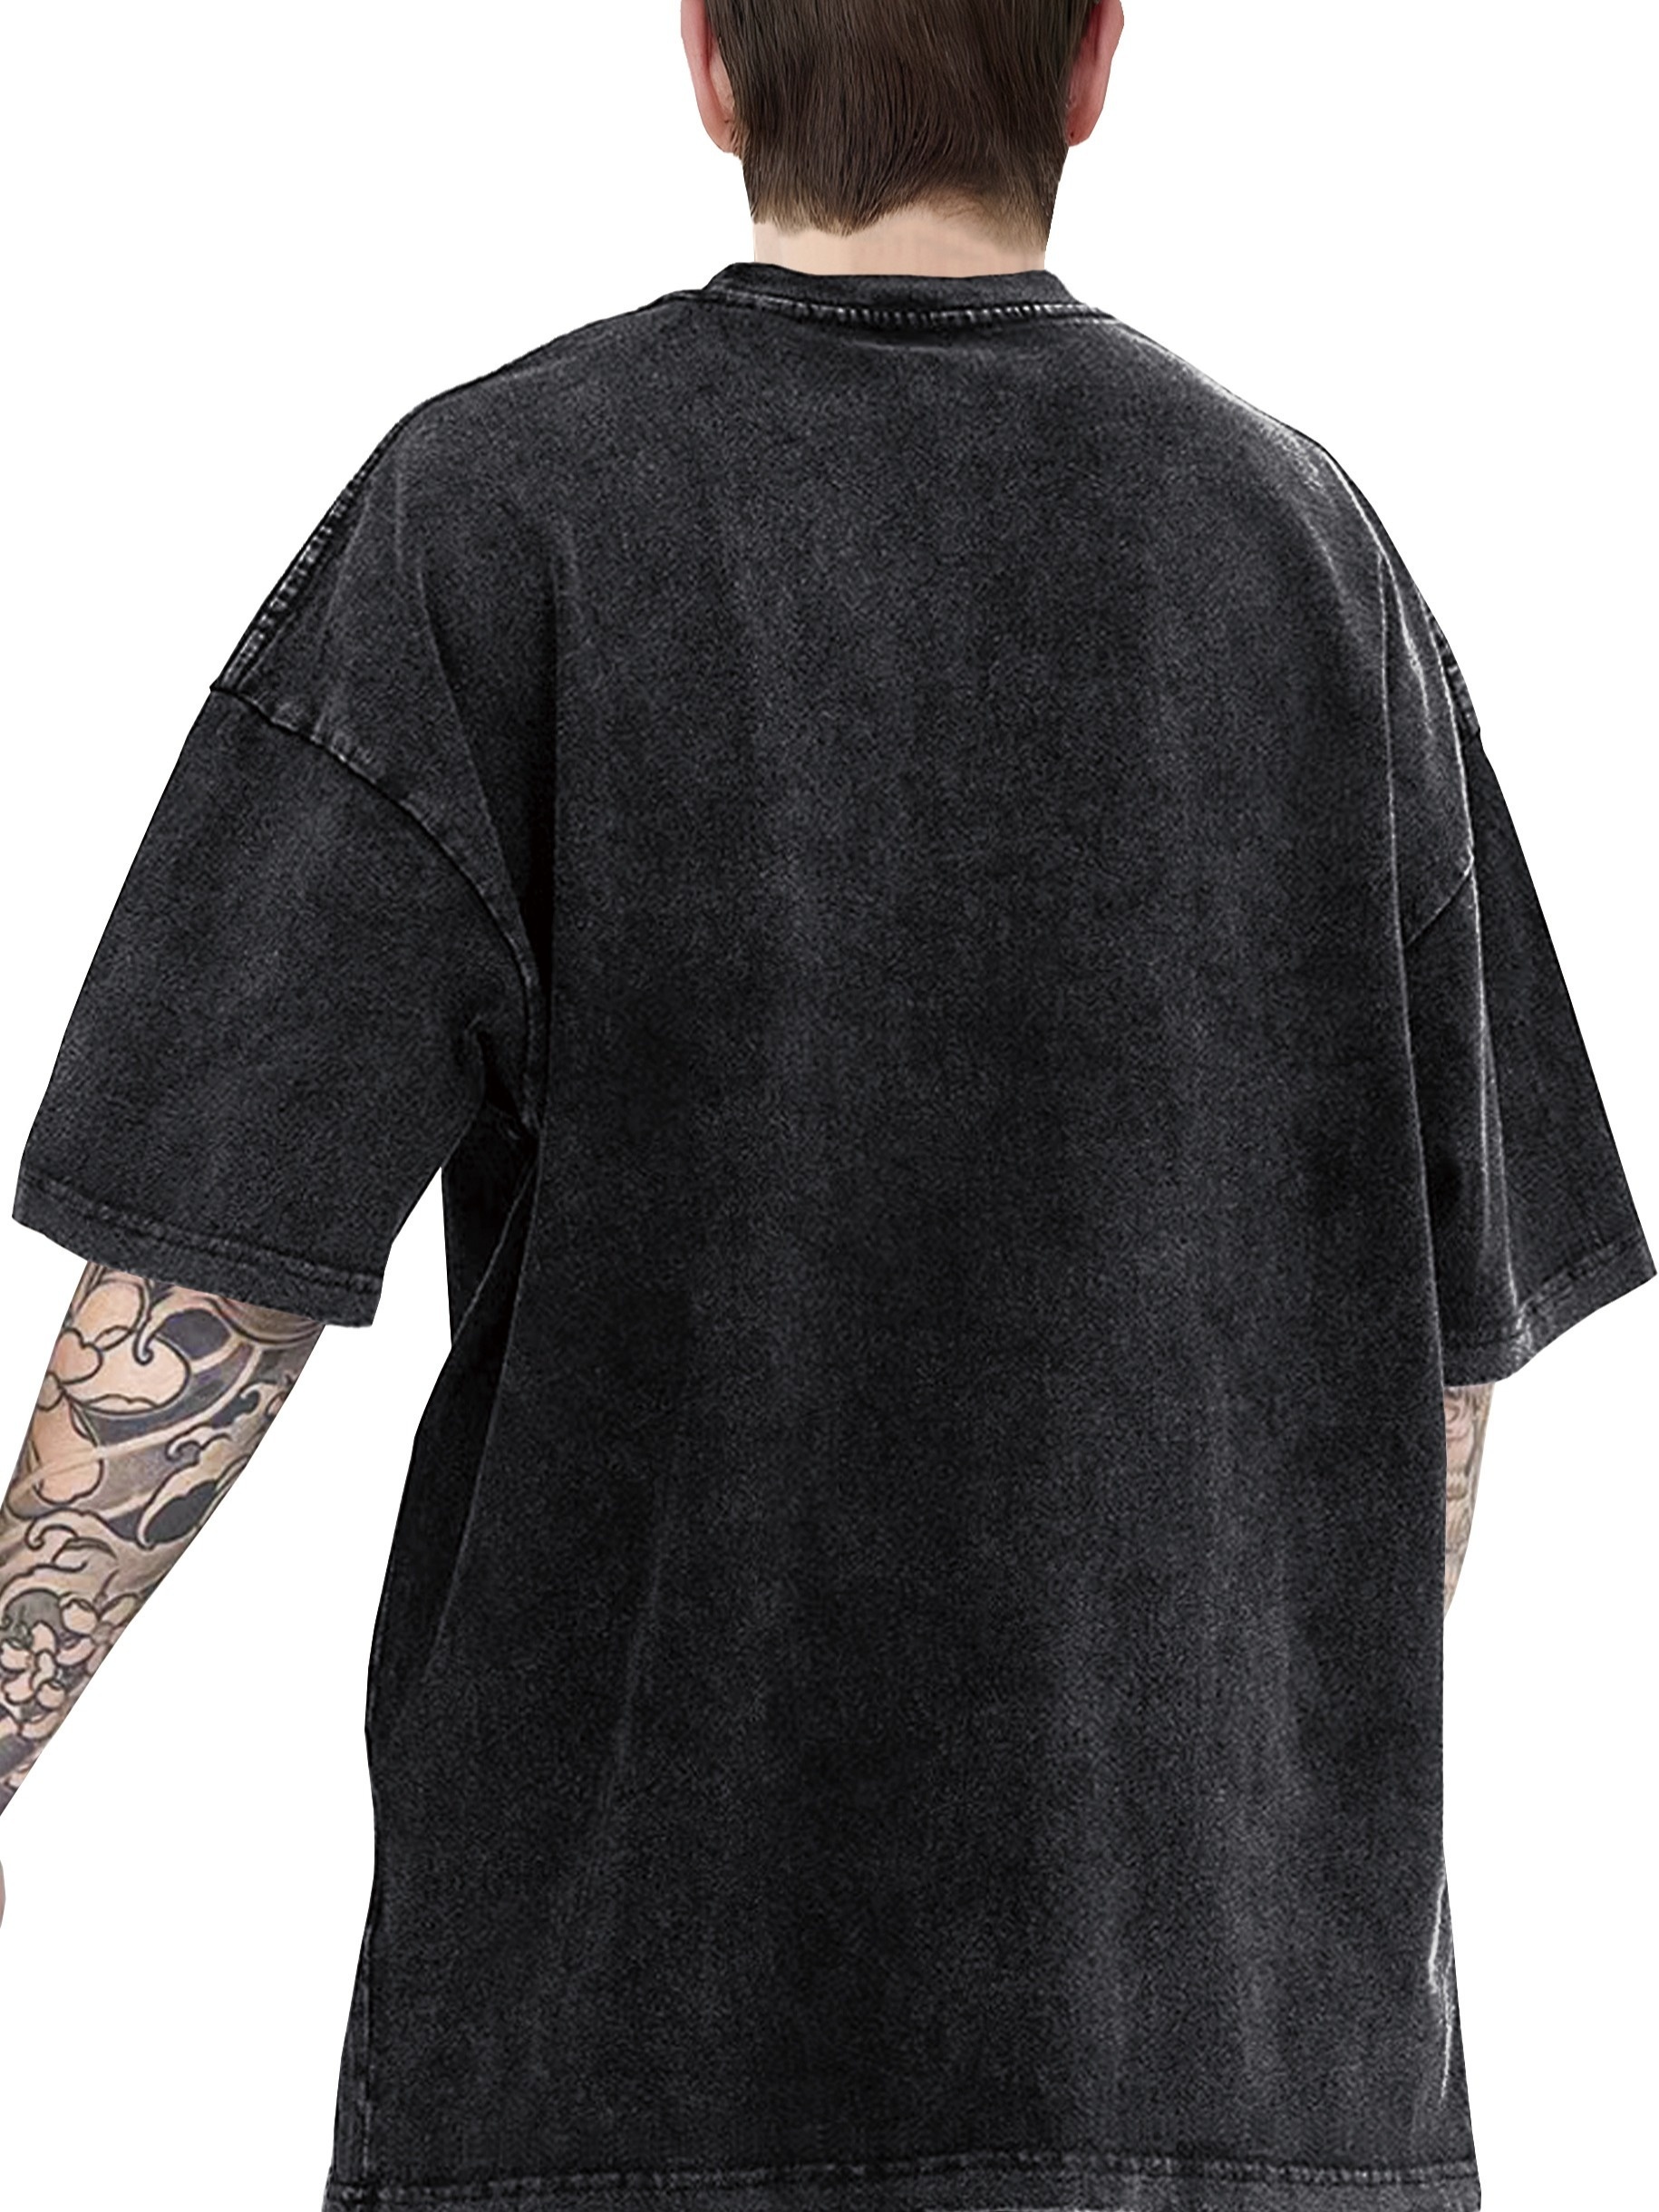  CafePress Negative Space T Shirt Men's 100% Cotton, Classic  Graphic Dark T-Shirt Black : Clothing, Shoes & Jewelry